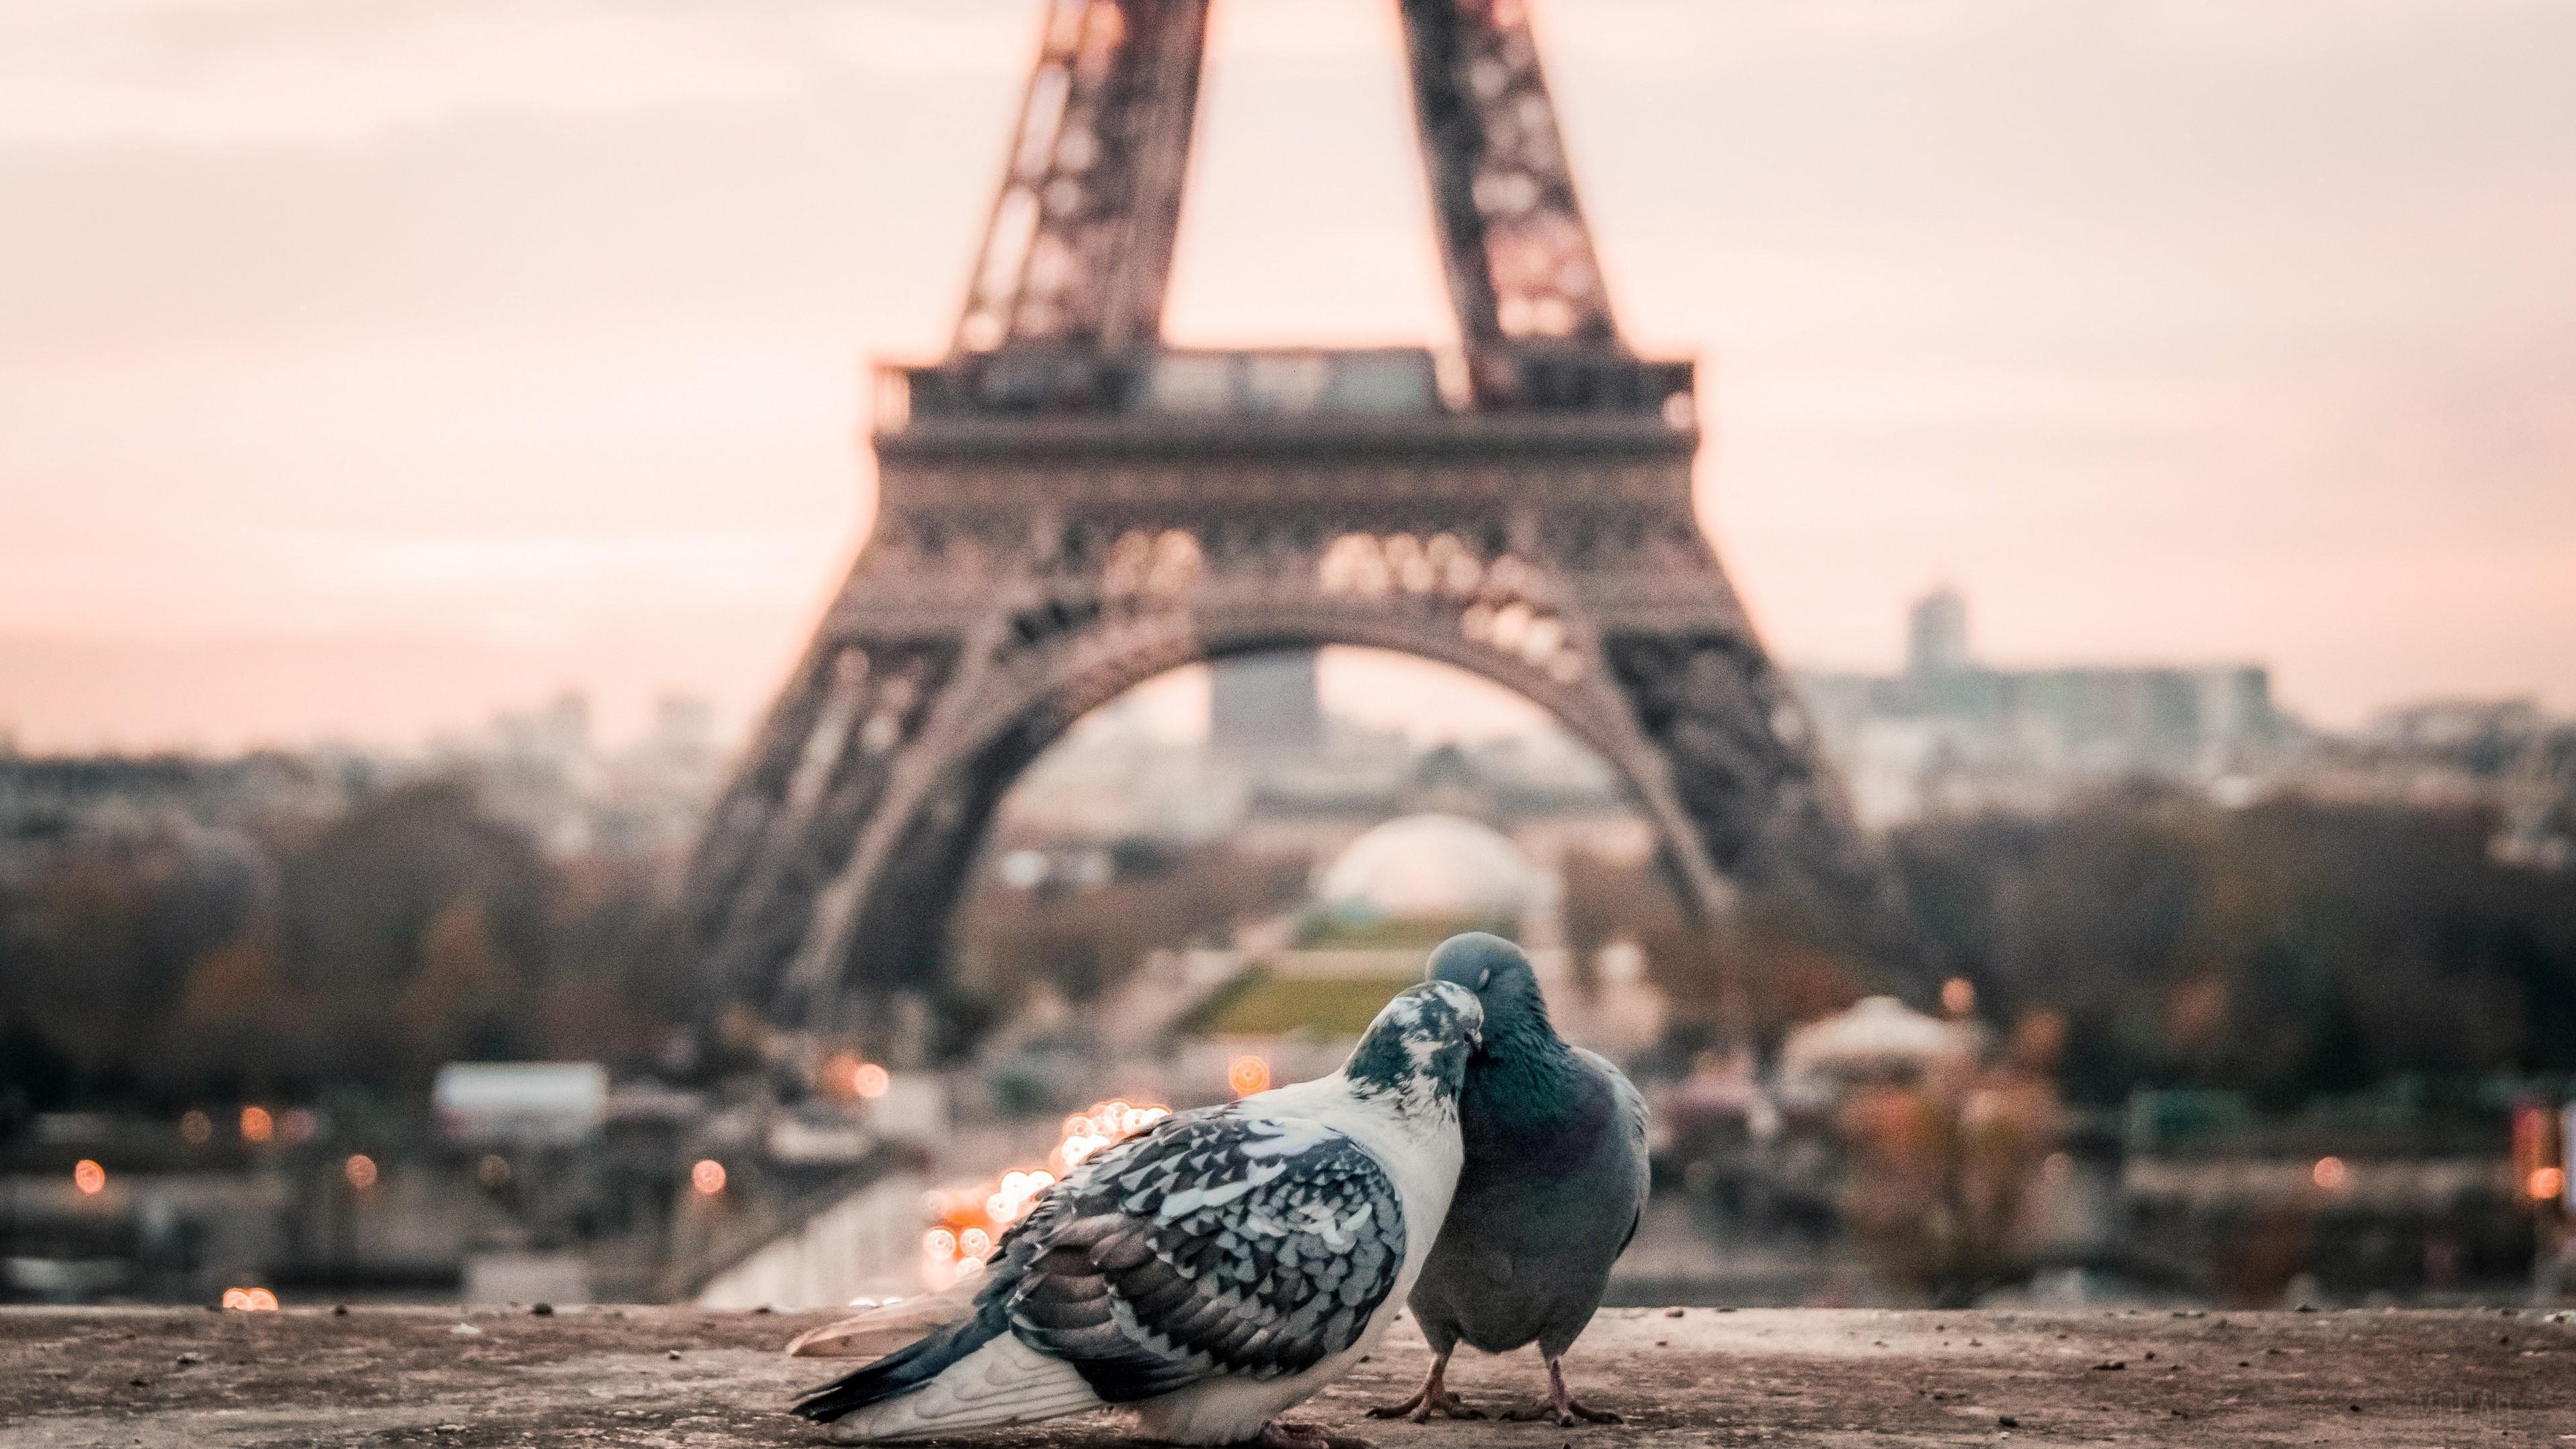 HD wallpaper, Eiffel Tower, Paris, Pigeon 4K, Depth Of Field, Couple, Bird